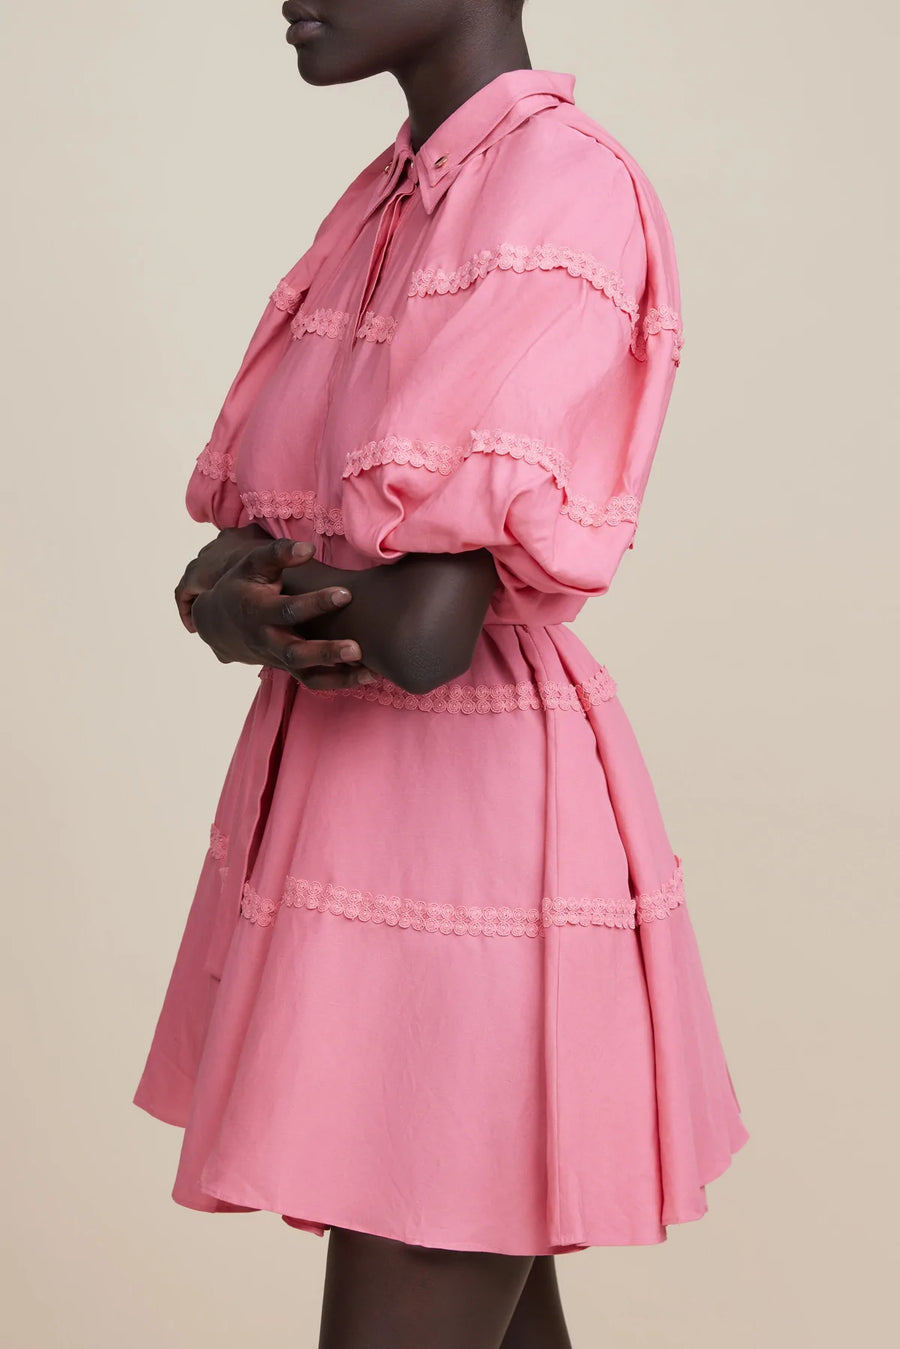 Acler - Bowdon Dress in Dusty Rose